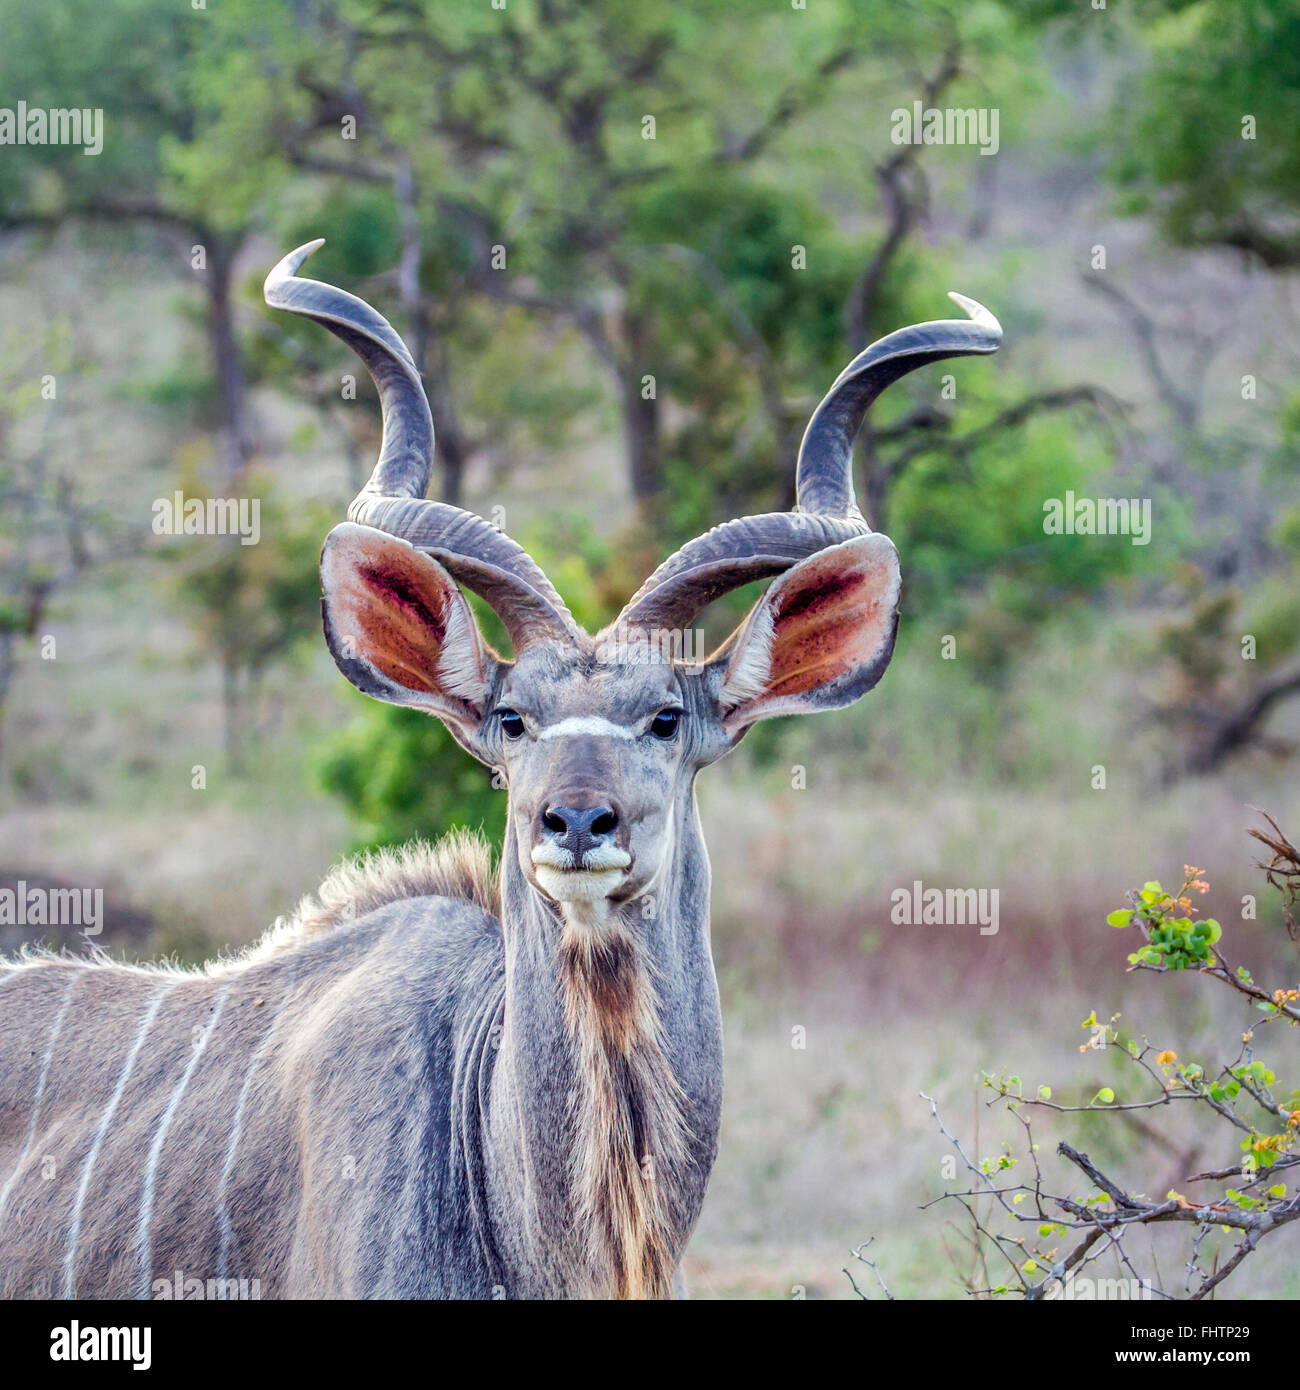 Maggiore kudu ; Specie Tragelaphus strepsiceros famiglia dei bovidi Kruger National Park, Sud Africa Foto Stock